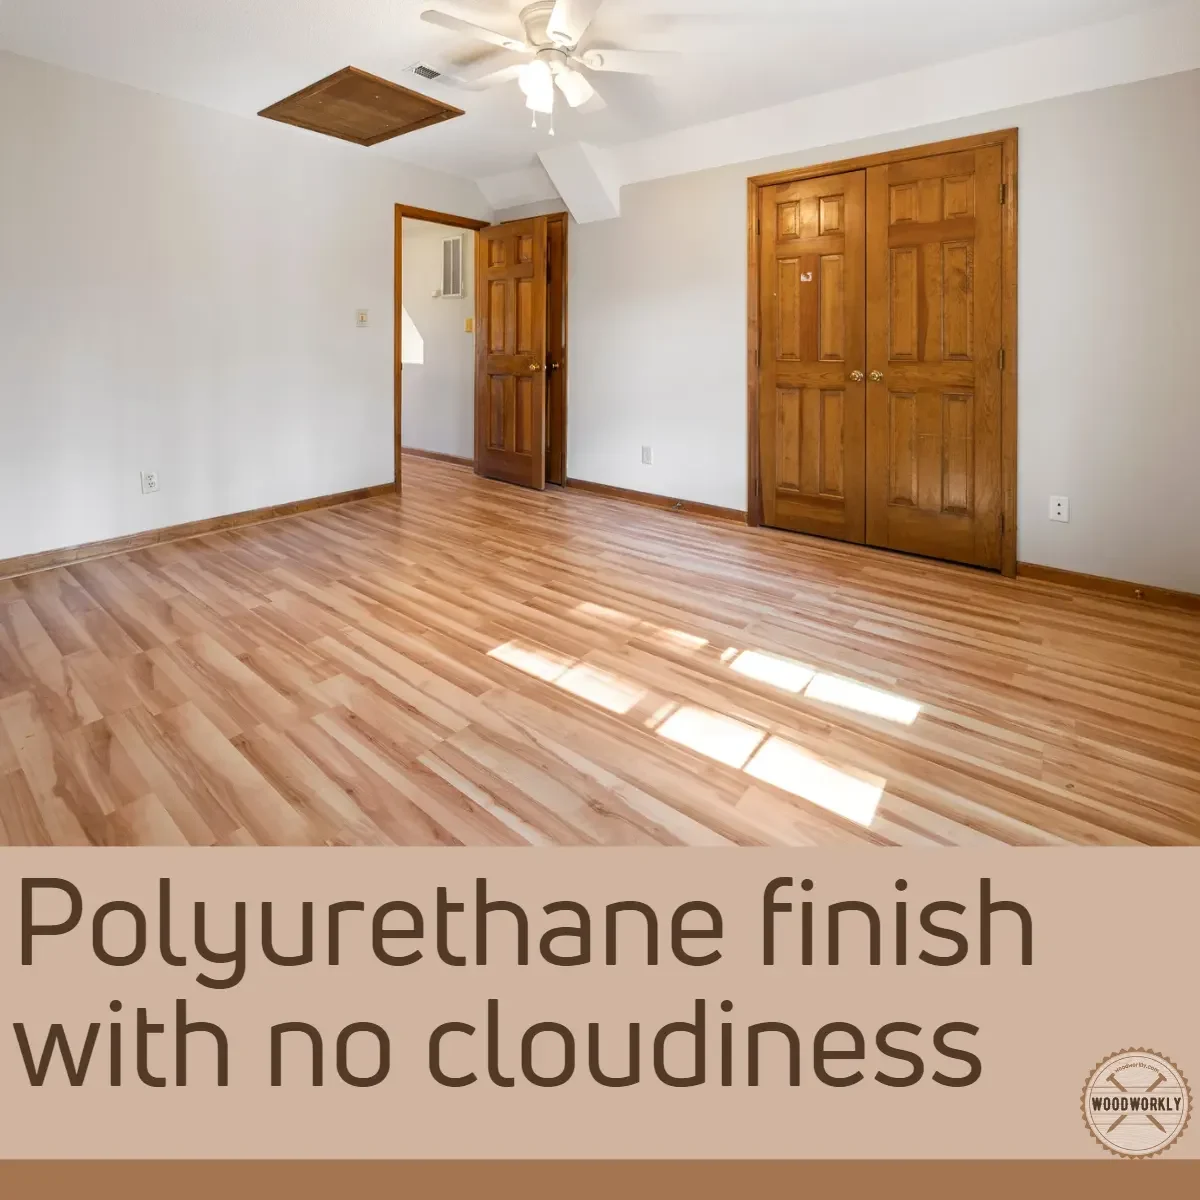 Polyurethane finish with no cloudiness